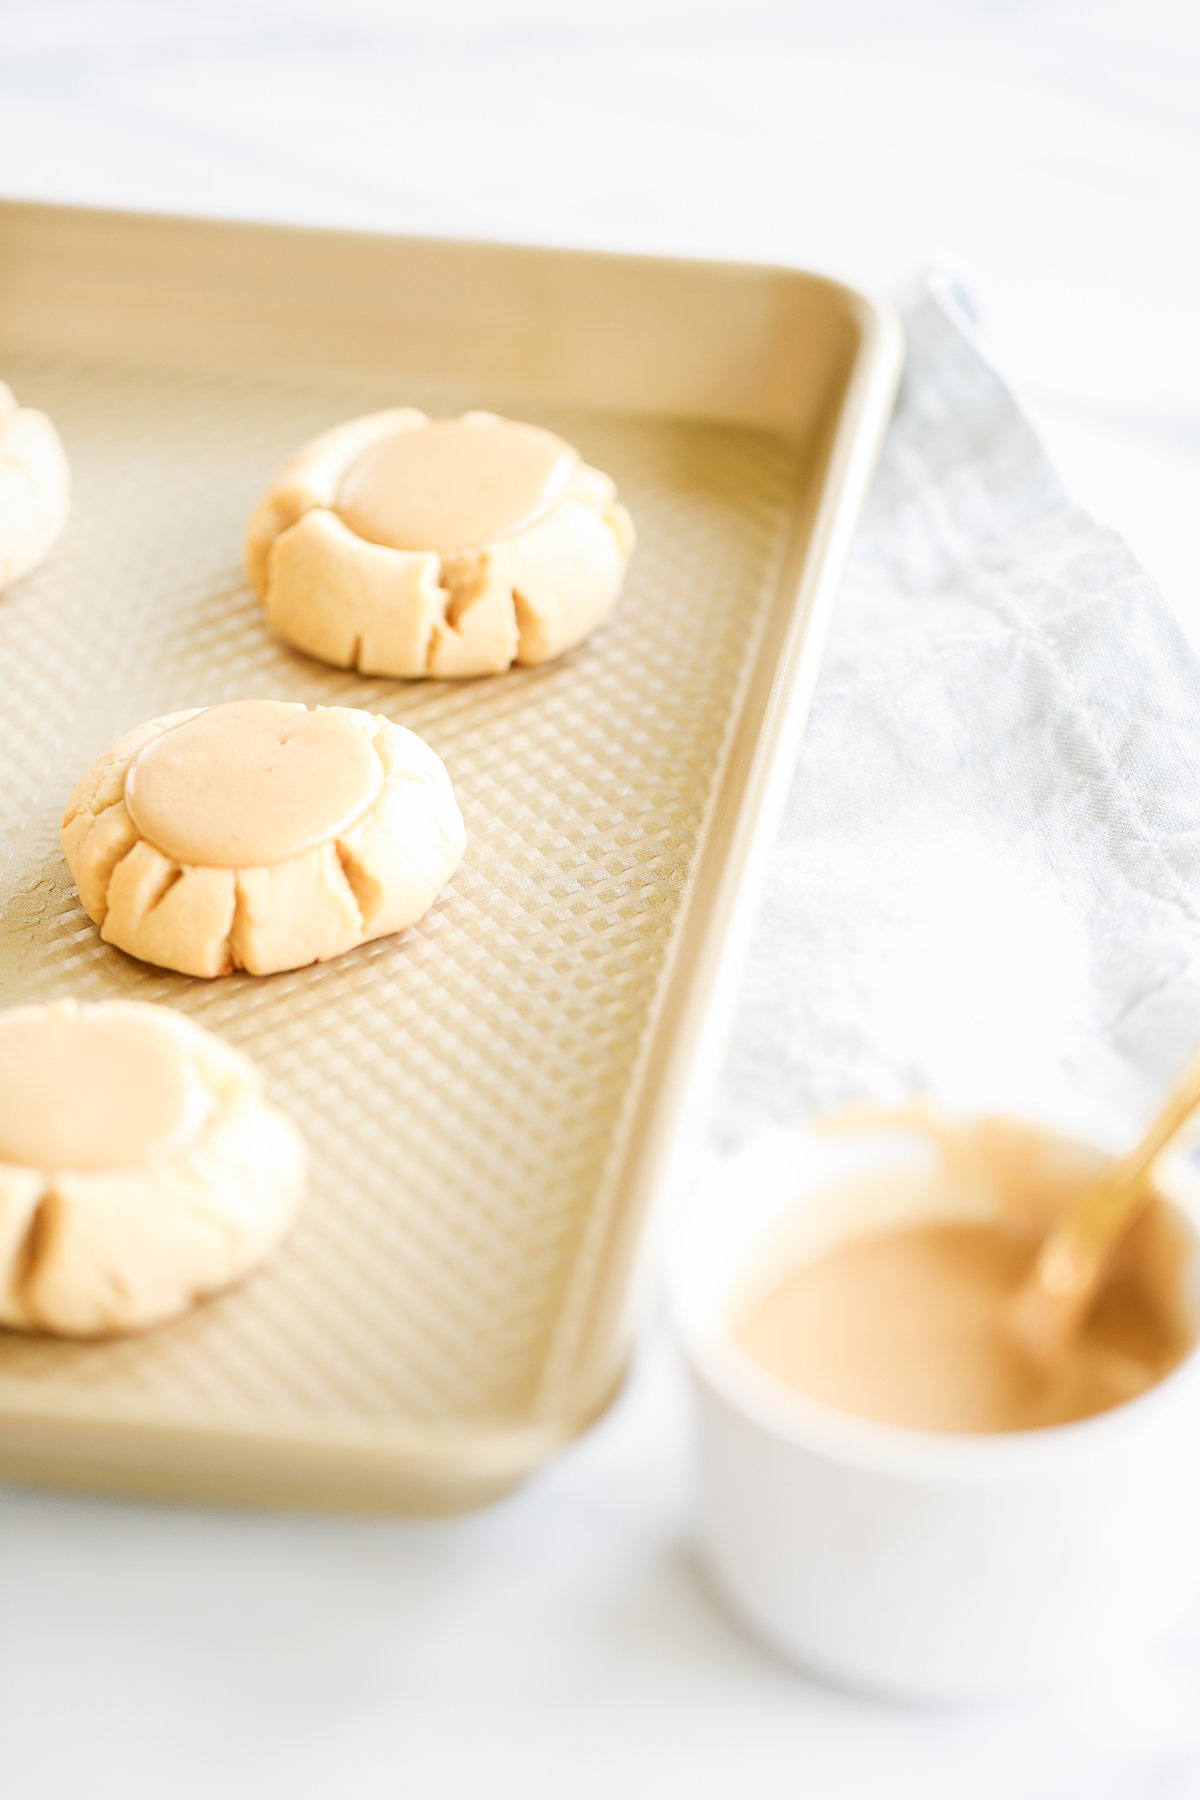 Peanut butter cookies with a caramel twist on a baking sheet.